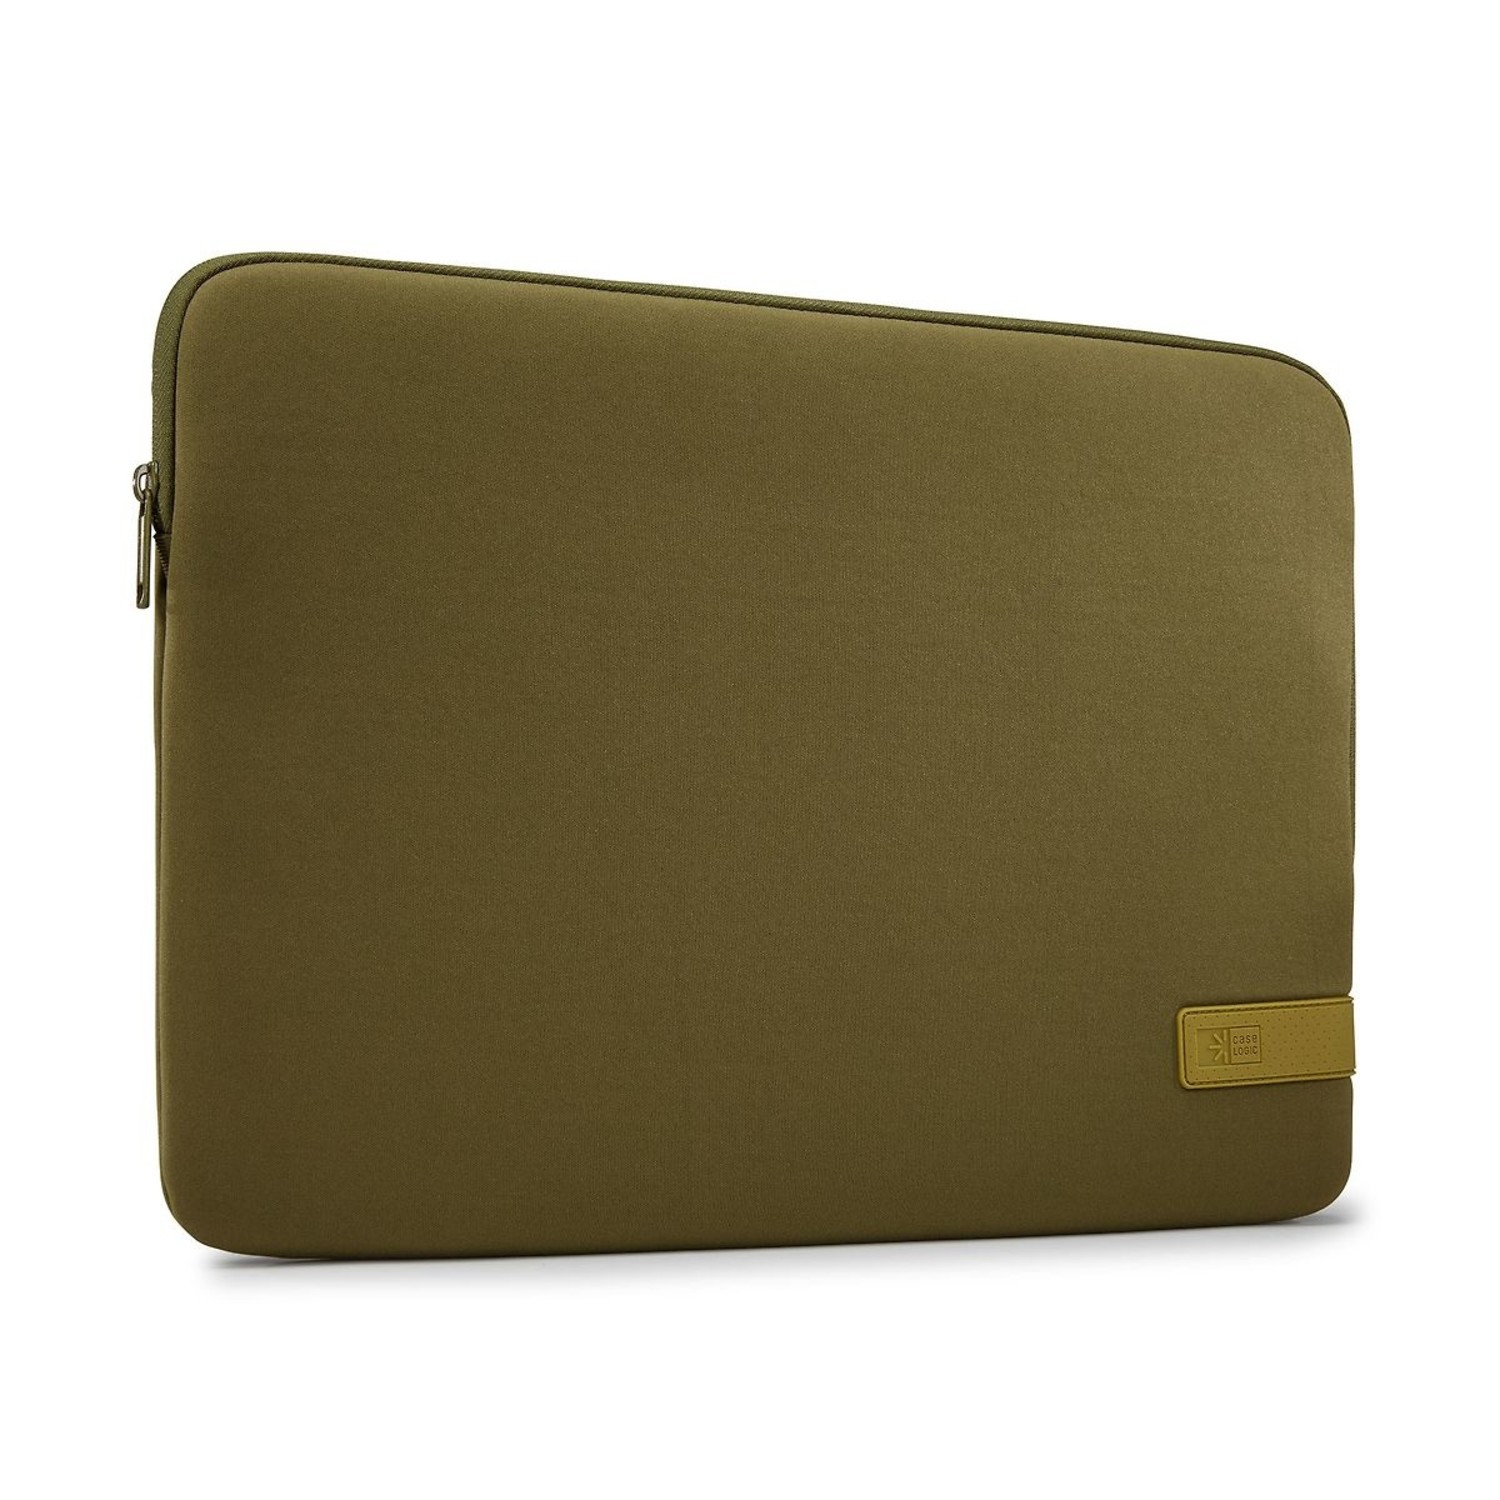 Case Logic Reflect 15.6 Laptop Sleeve Capulet Olive/Green Olive -  kite+key, Rutgers Tech Store